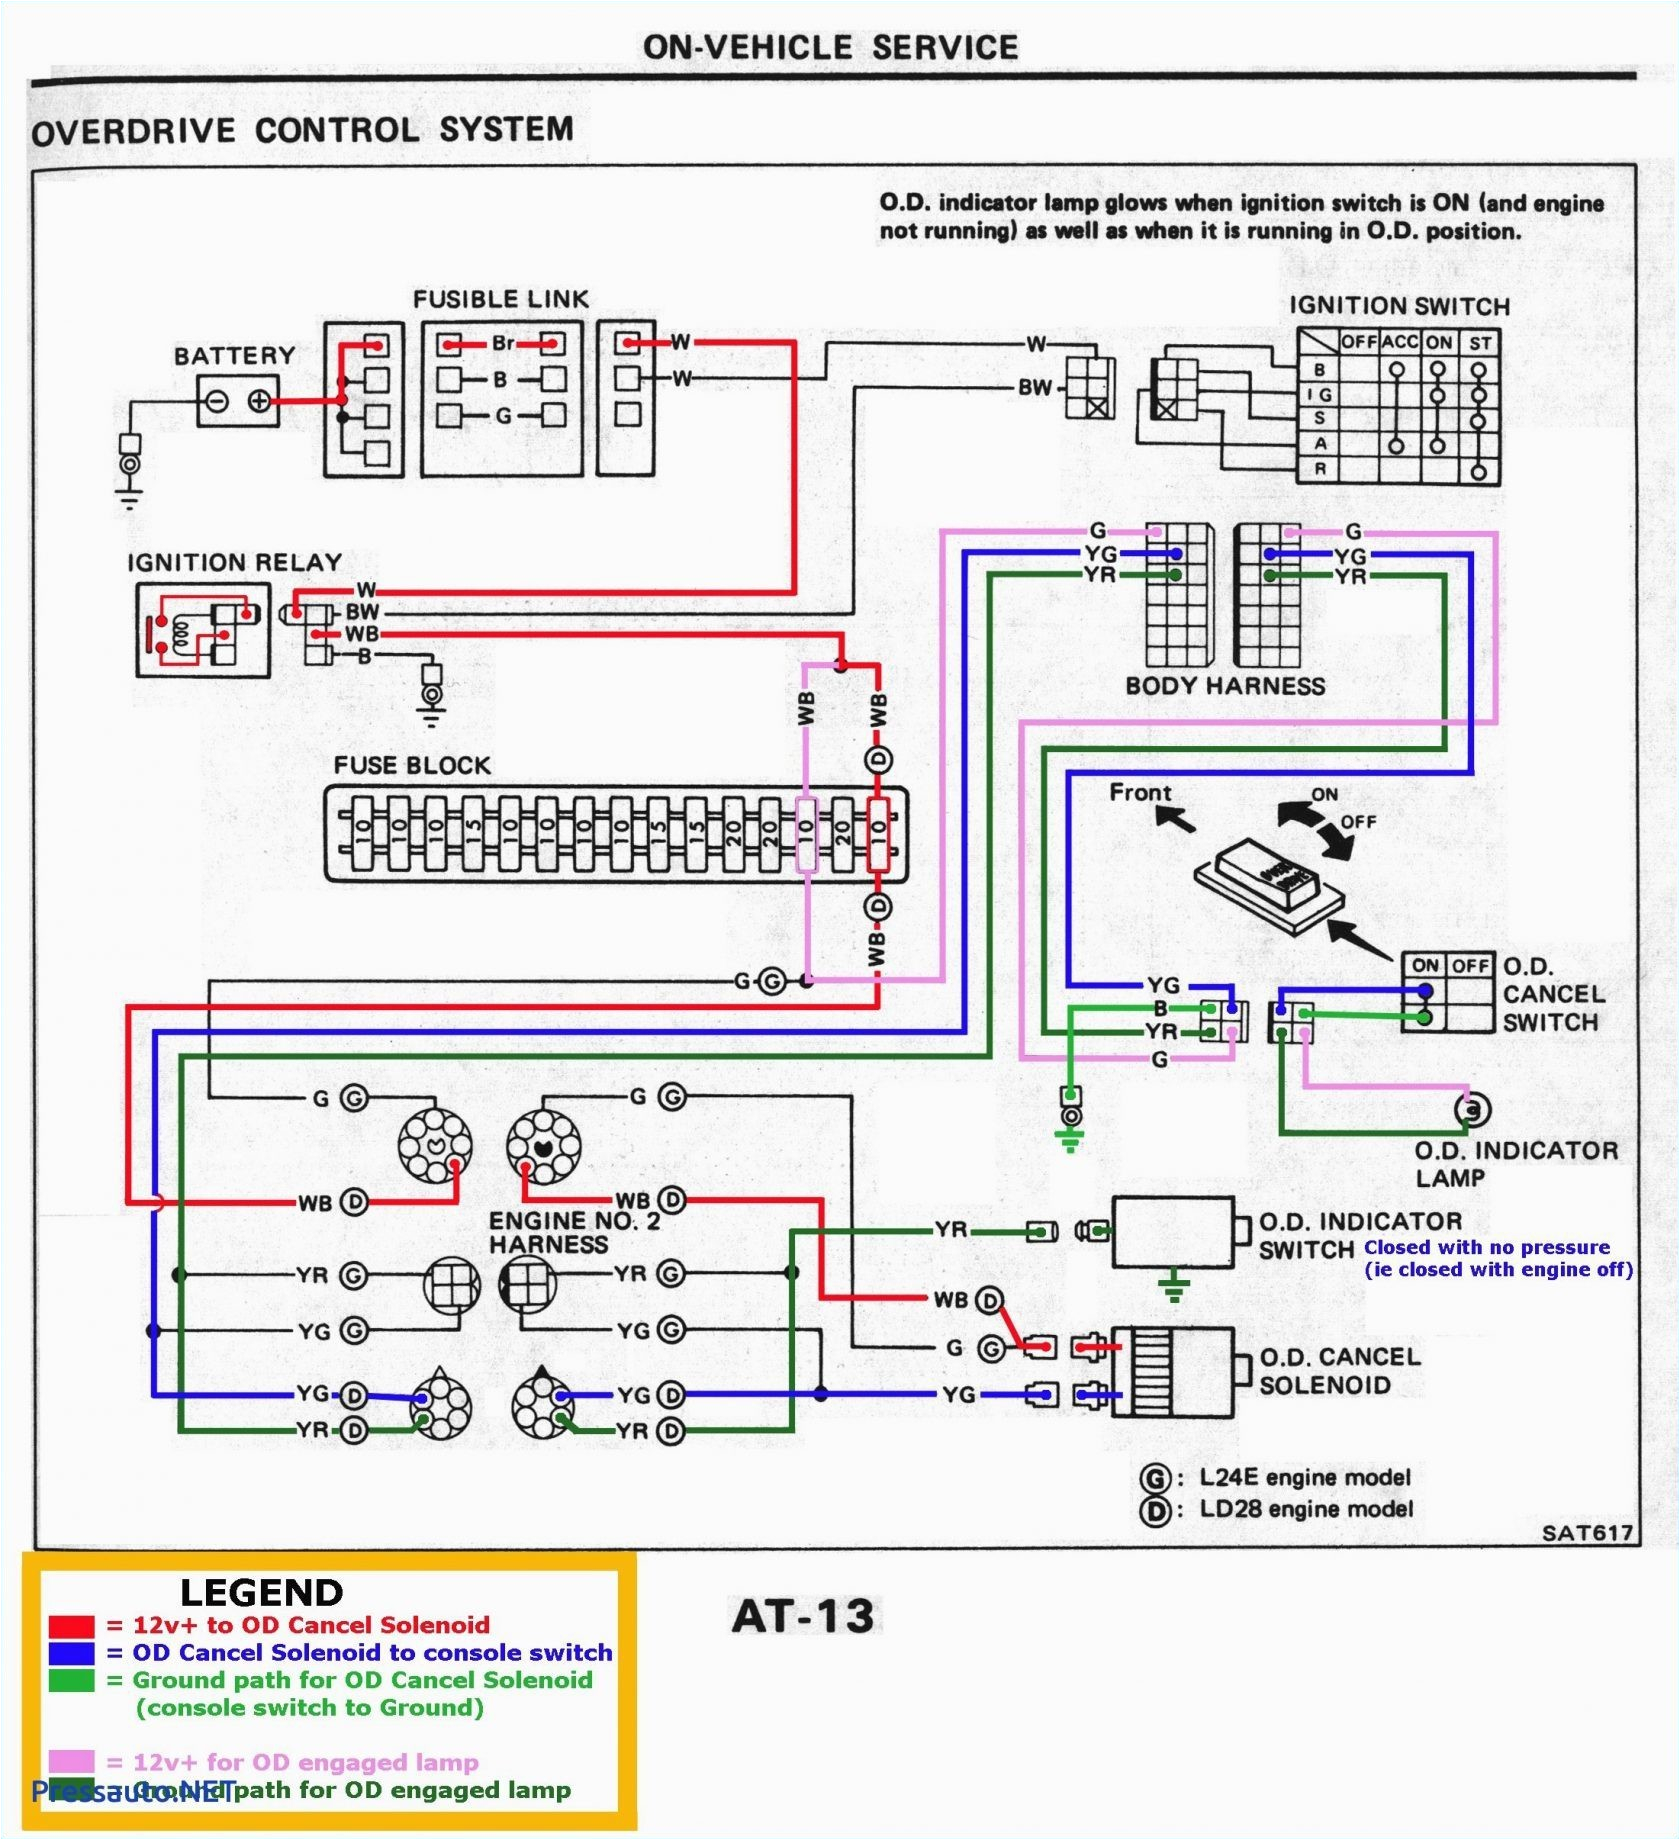 wiring diagrams bmw e36 wiring diagram go wiring diagram of wall outlet wiring diagram of bmw